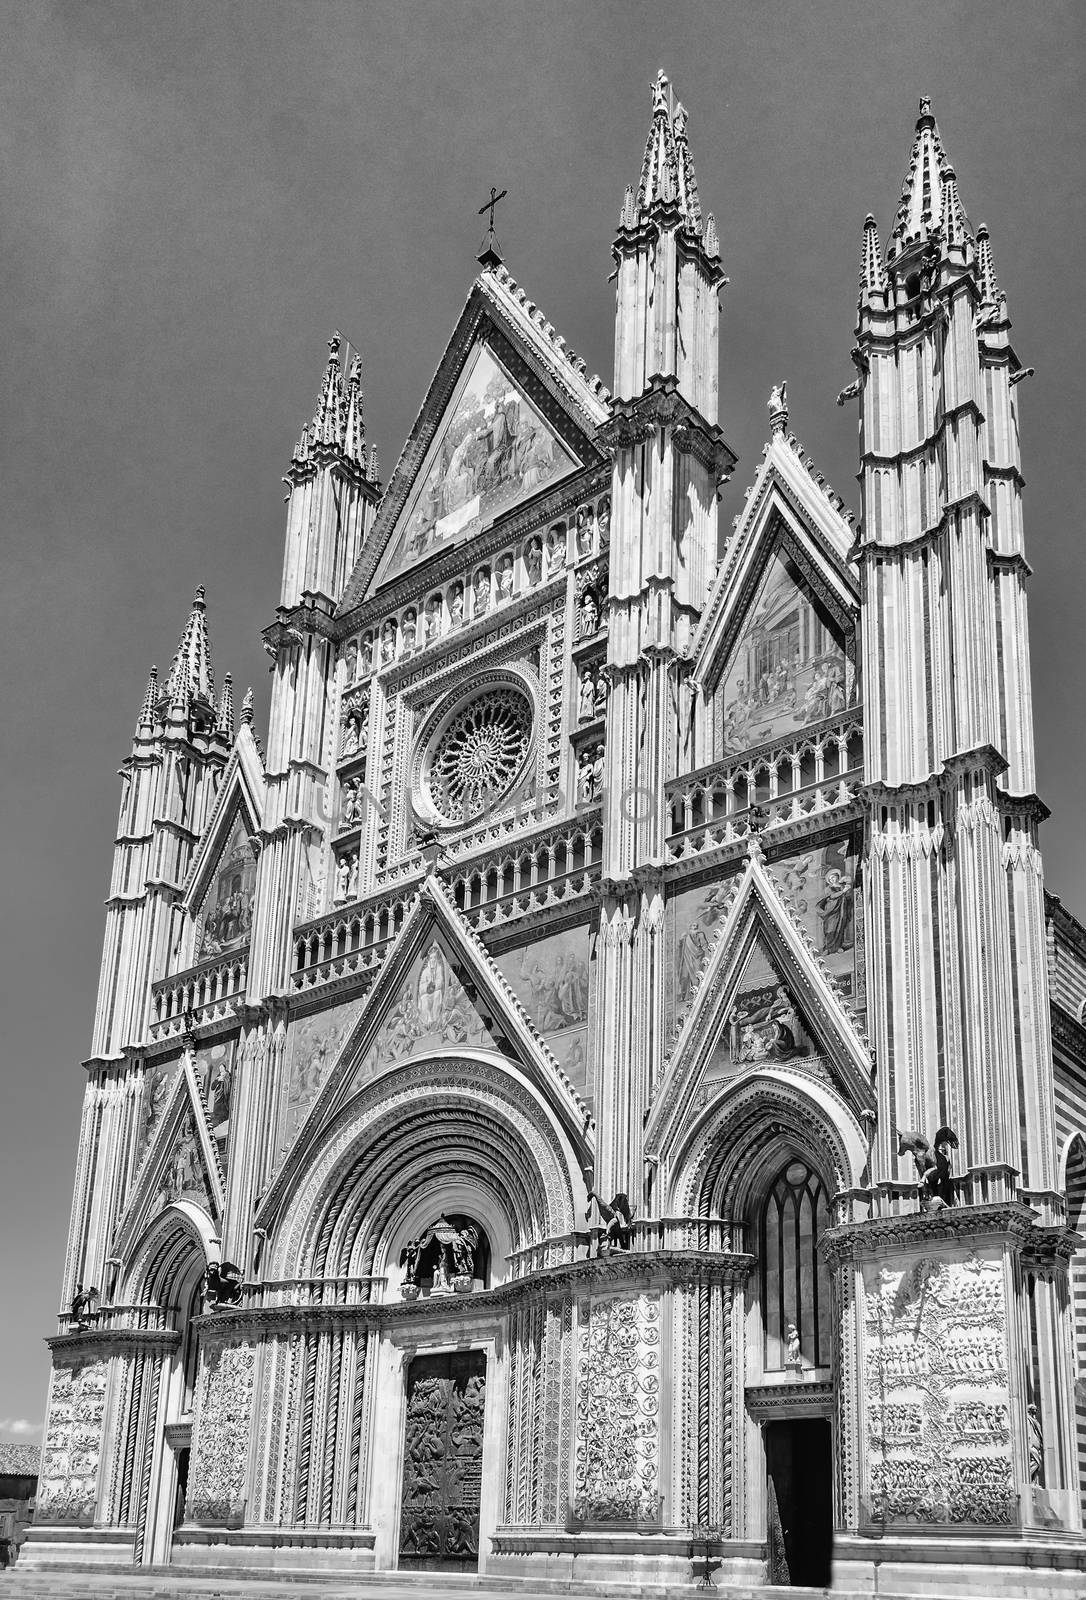 Orvieto Cathedral, Italy by marcorubino